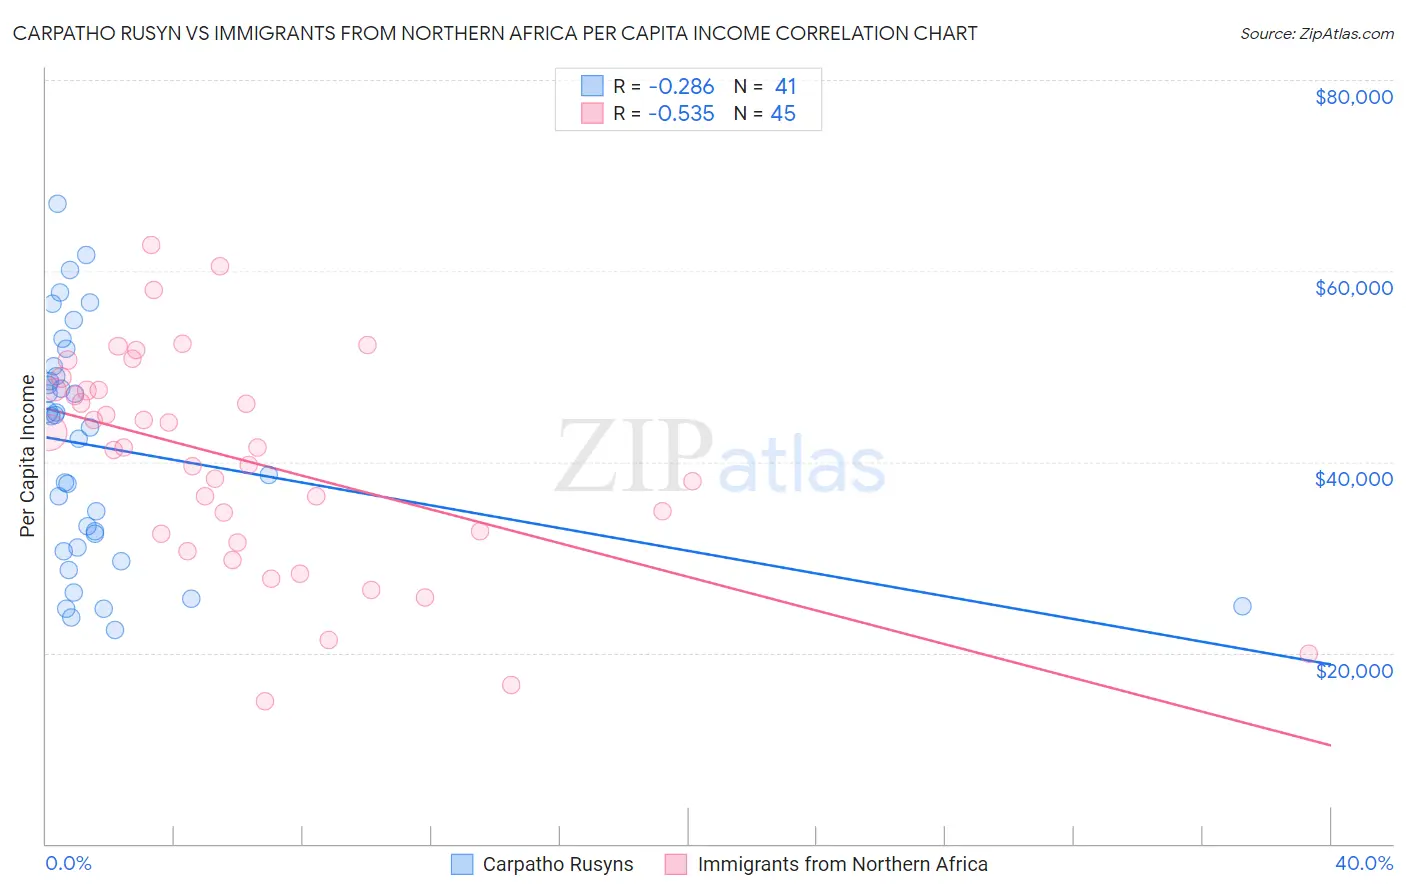 Carpatho Rusyn vs Immigrants from Northern Africa Per Capita Income